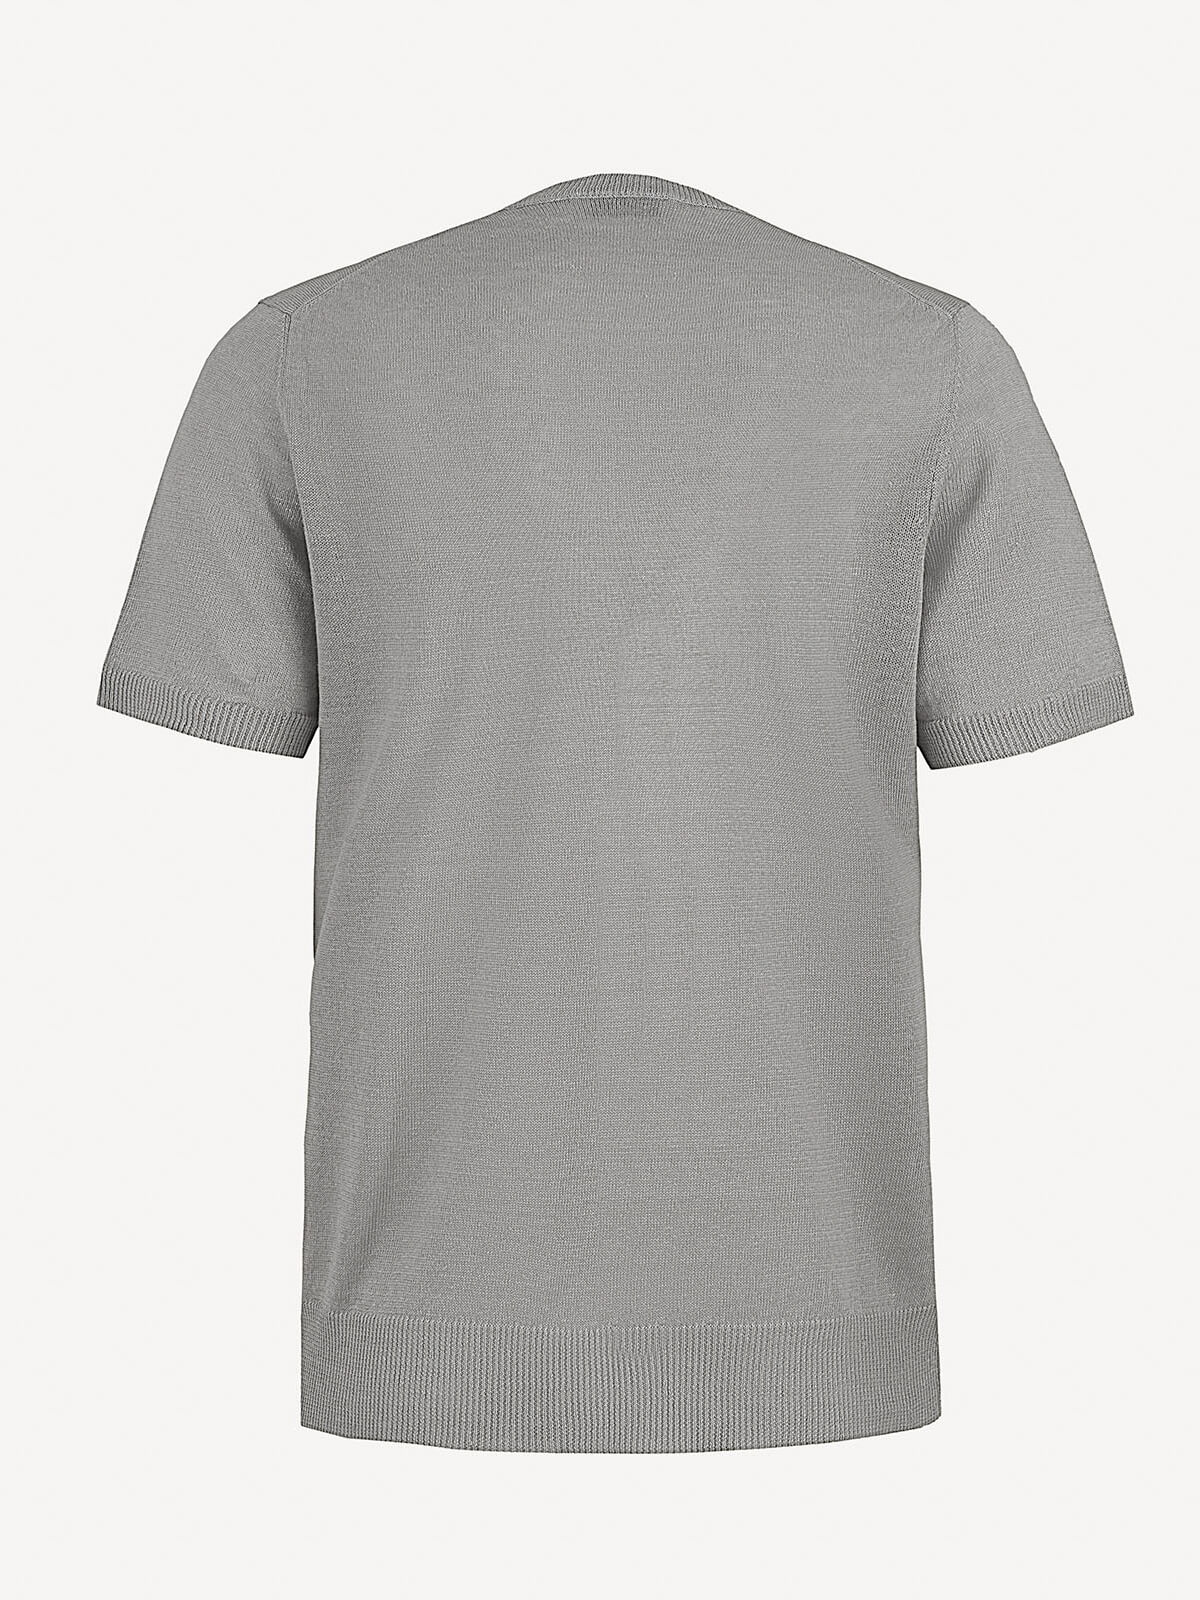 Linen tshirt for man light grey color back view 100% Capri